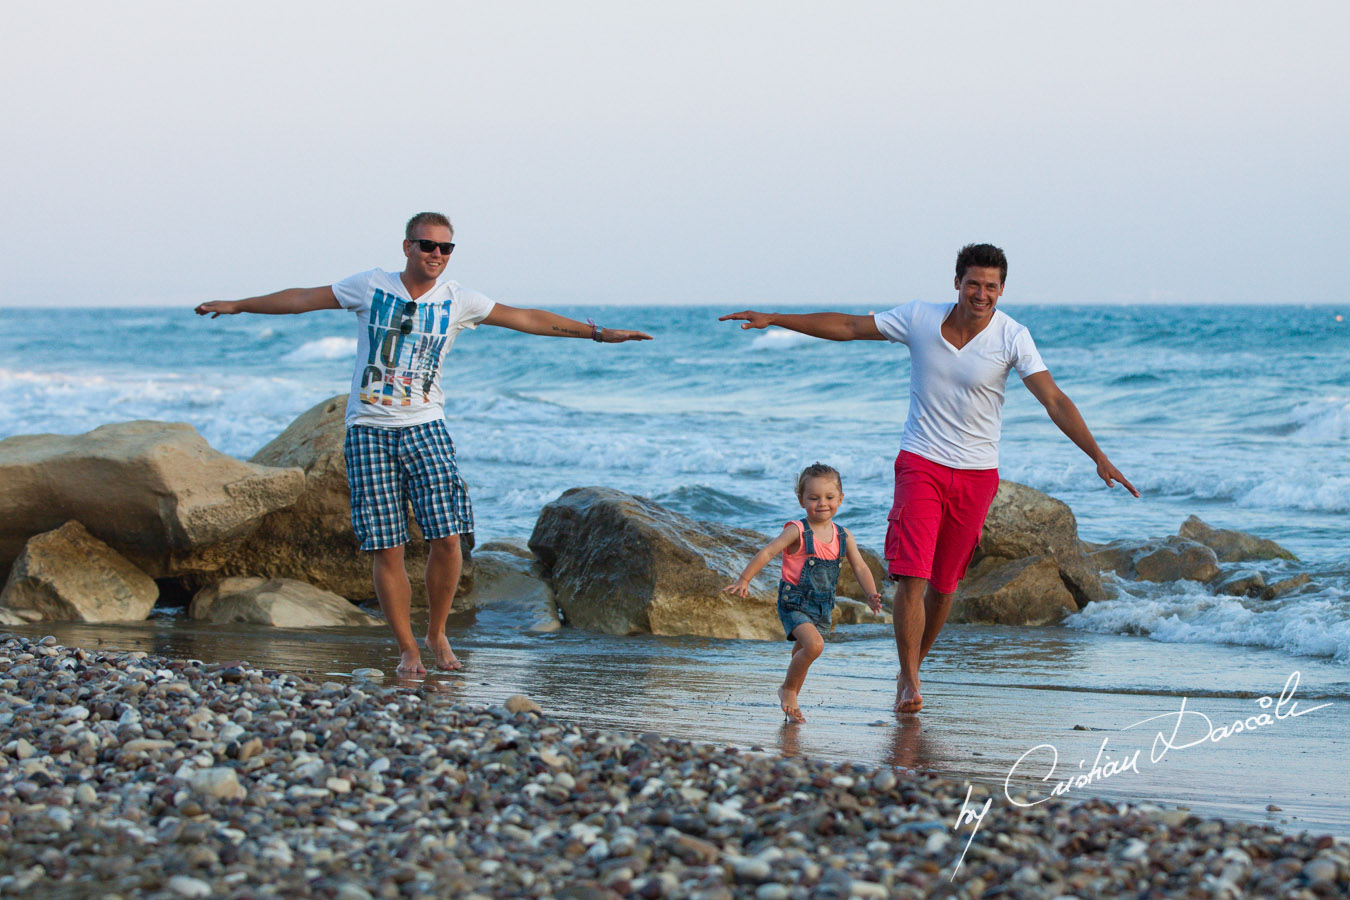 Photo Shoot in Cyprus - Nicky, Laura & Caitlin. Cyprus Photographer: Cristian Dascalu